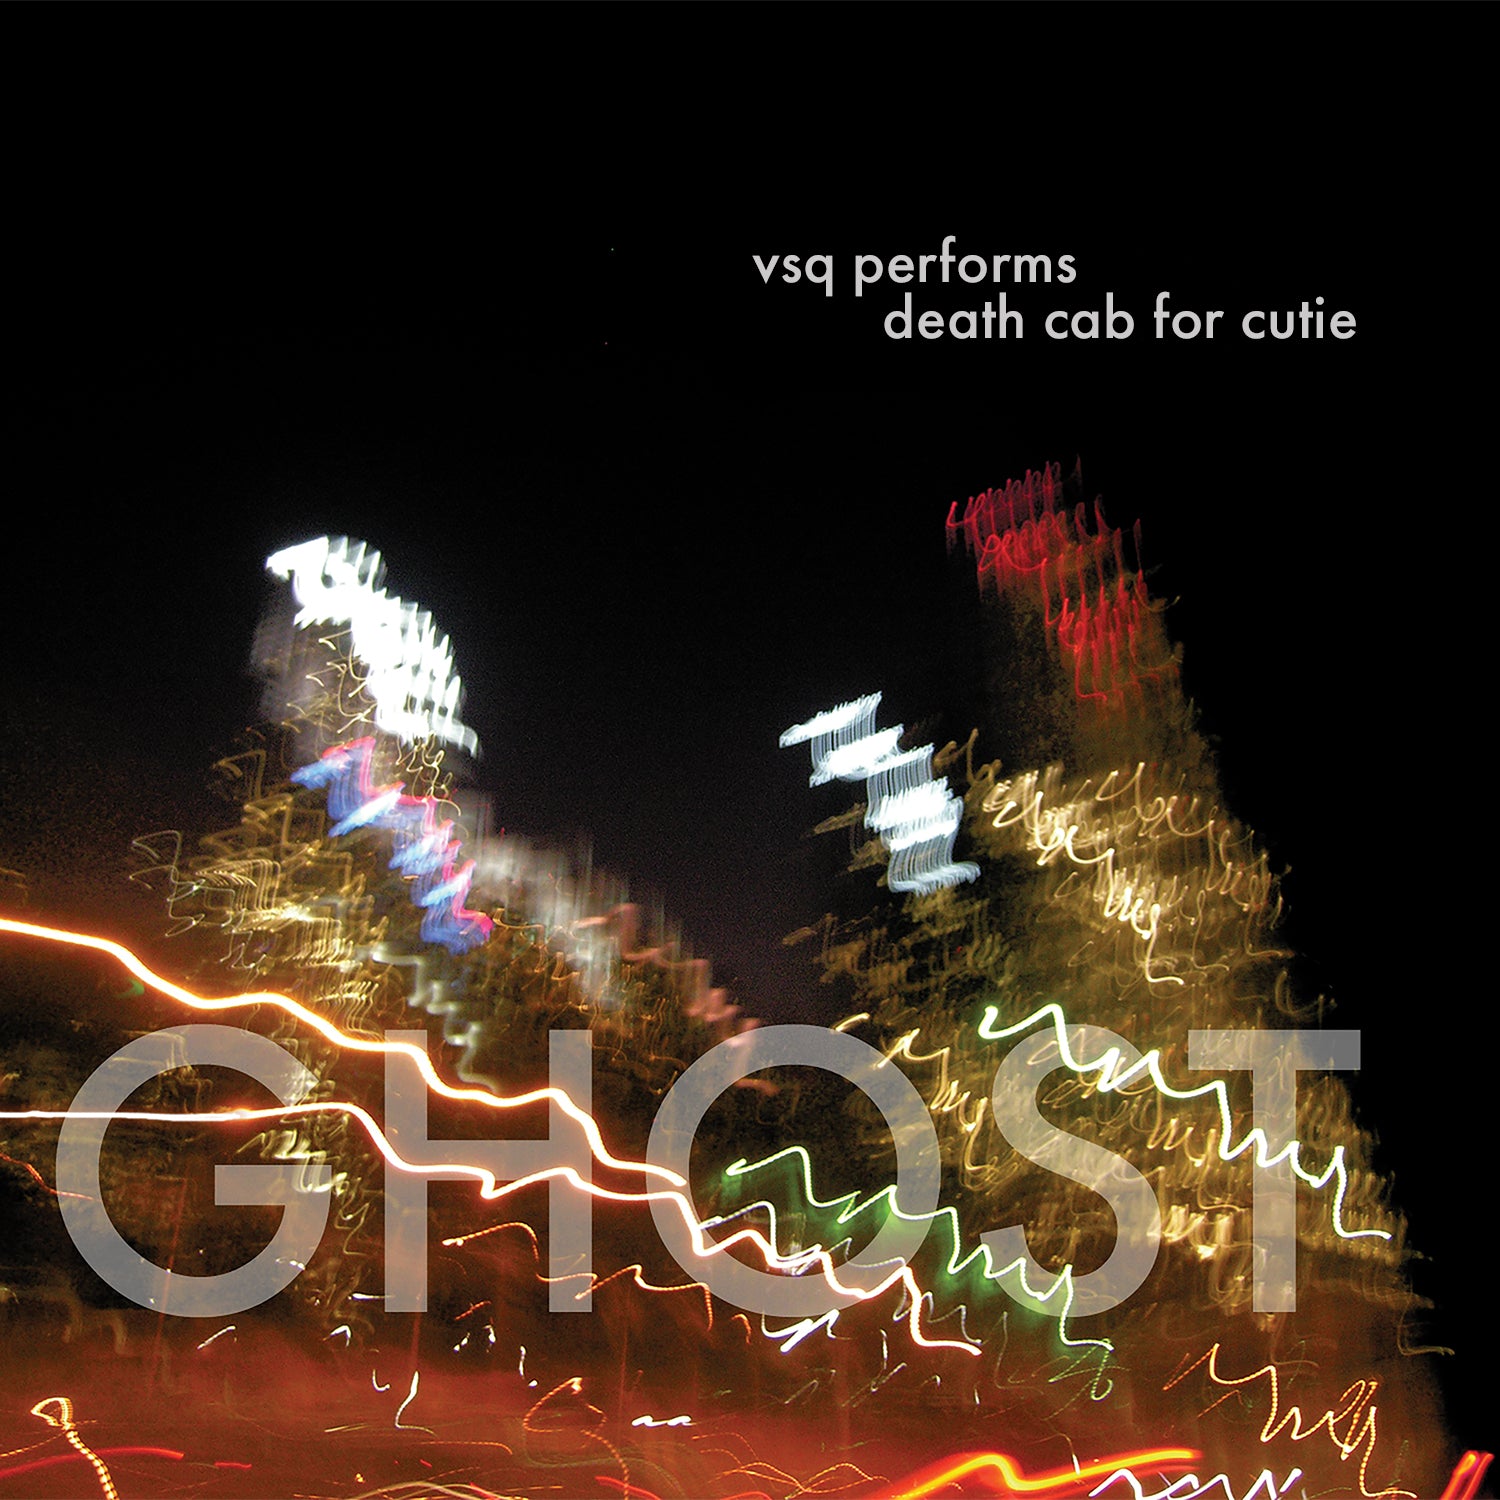 album cover for ghost vsq death cab for cutie tribute